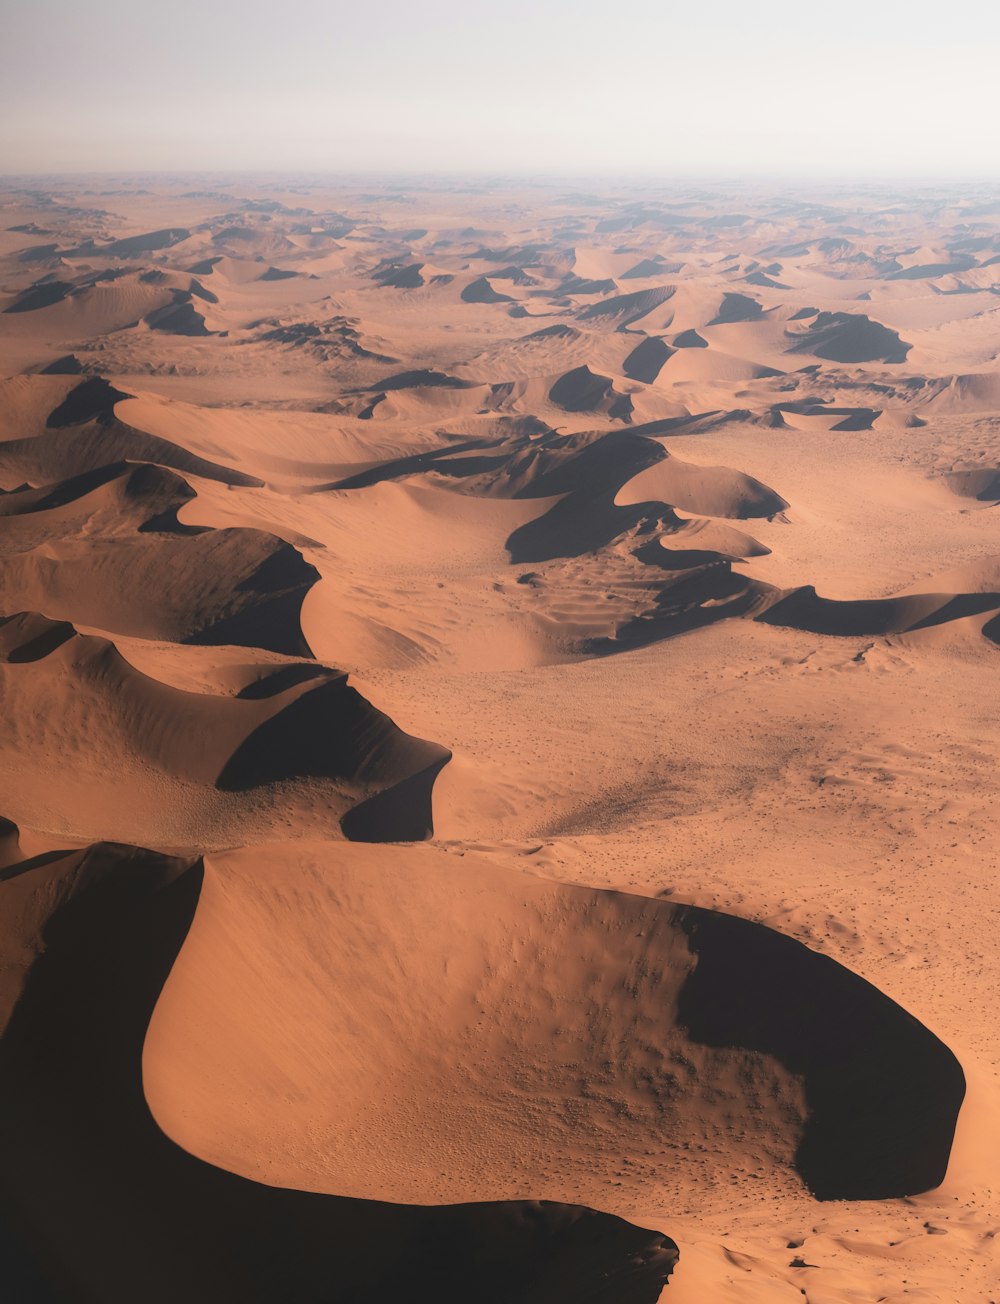 a desert landscape with a river